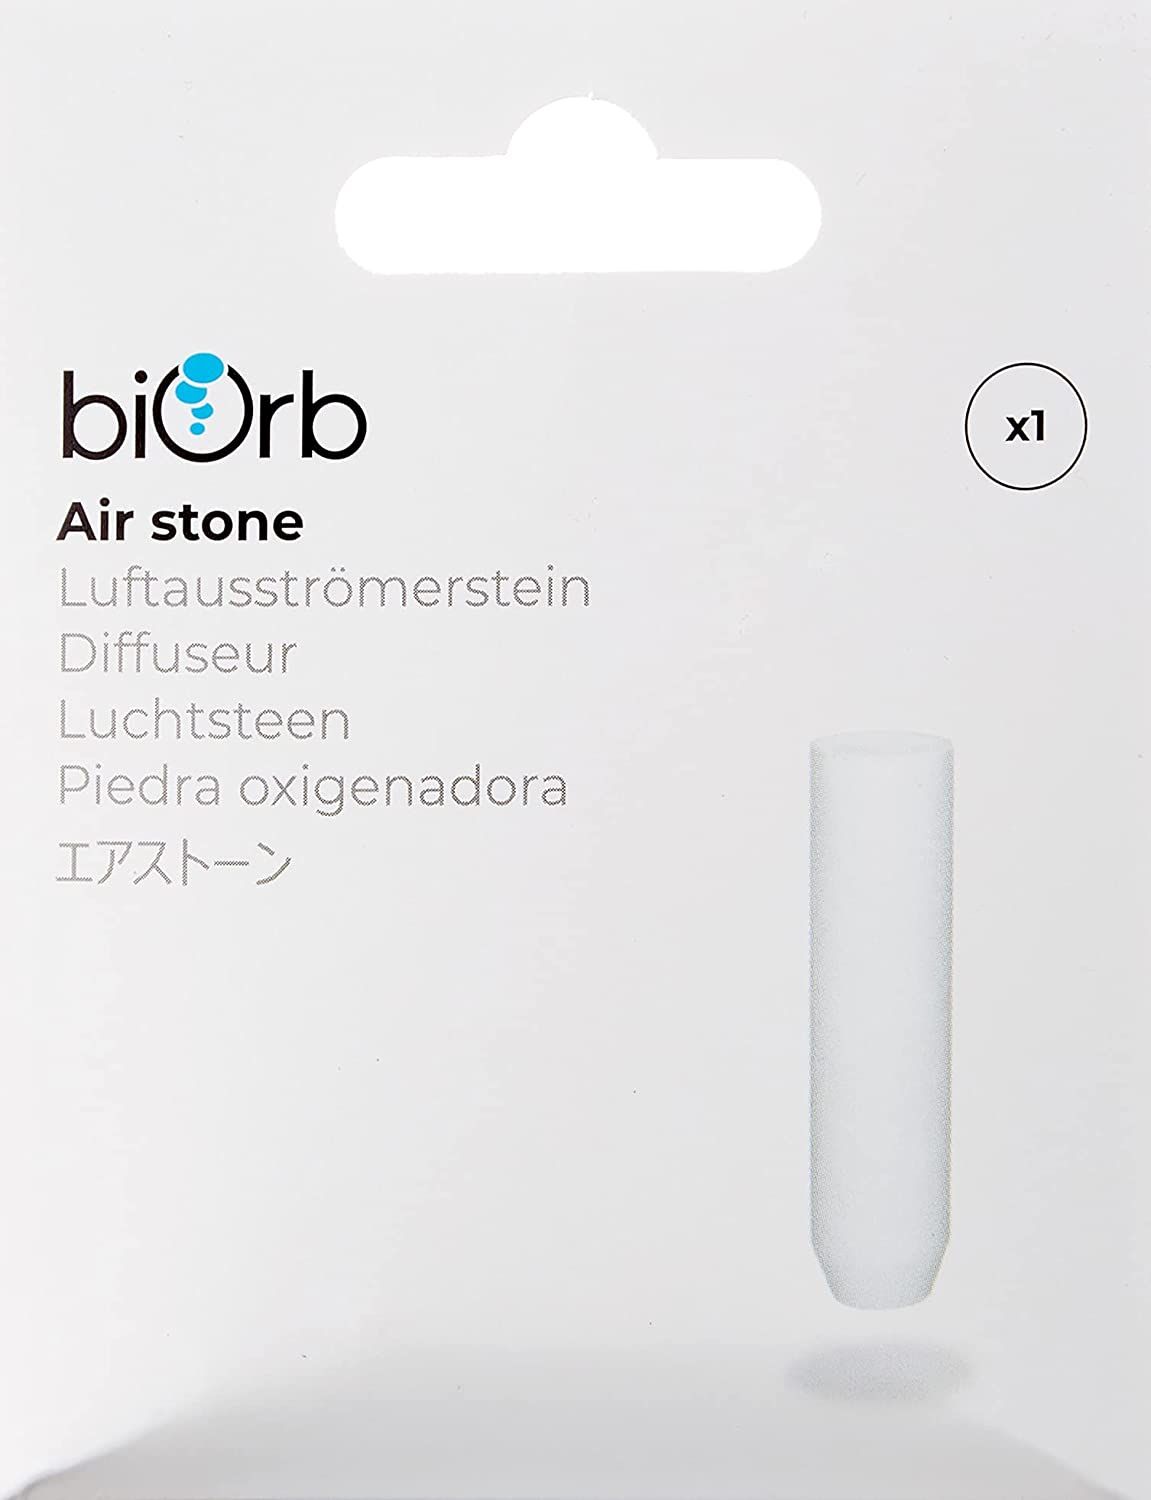 Biorb Air stone Oase